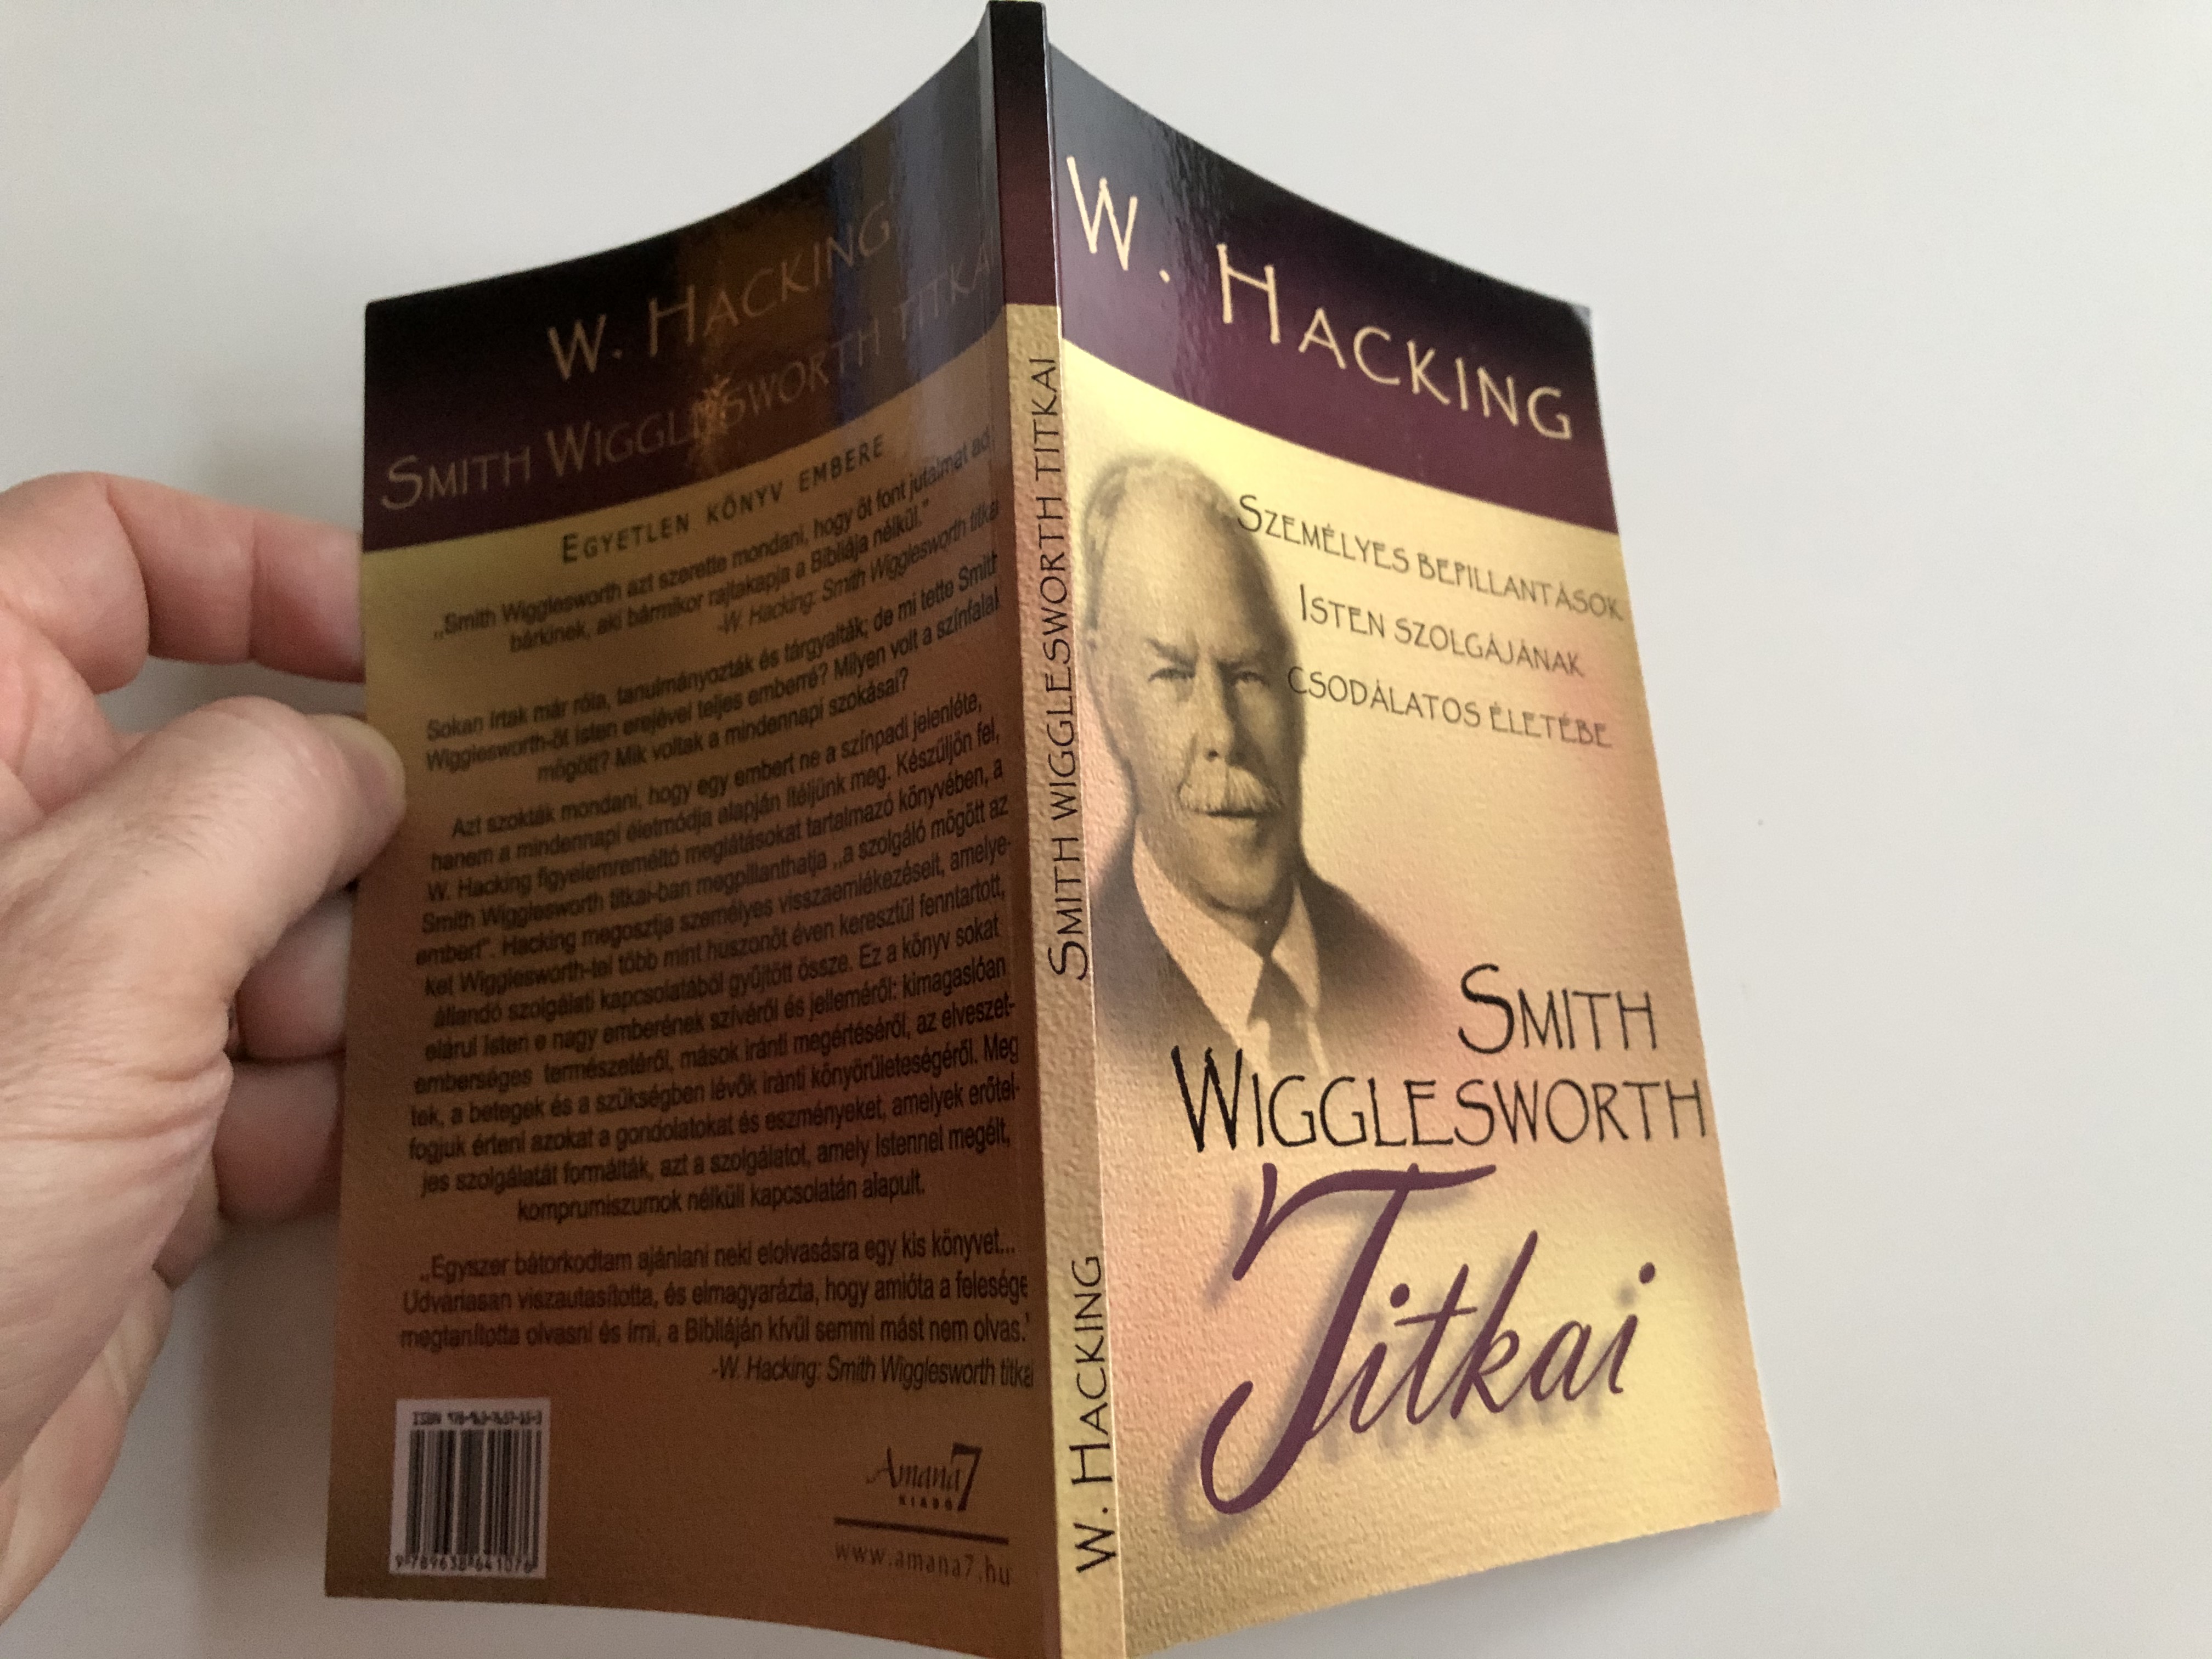 smith-wigglesworth-titkai-by-w.-hacking-hungarian-edition-of-secrets-of-smith-wigglesworth-9-.jpg